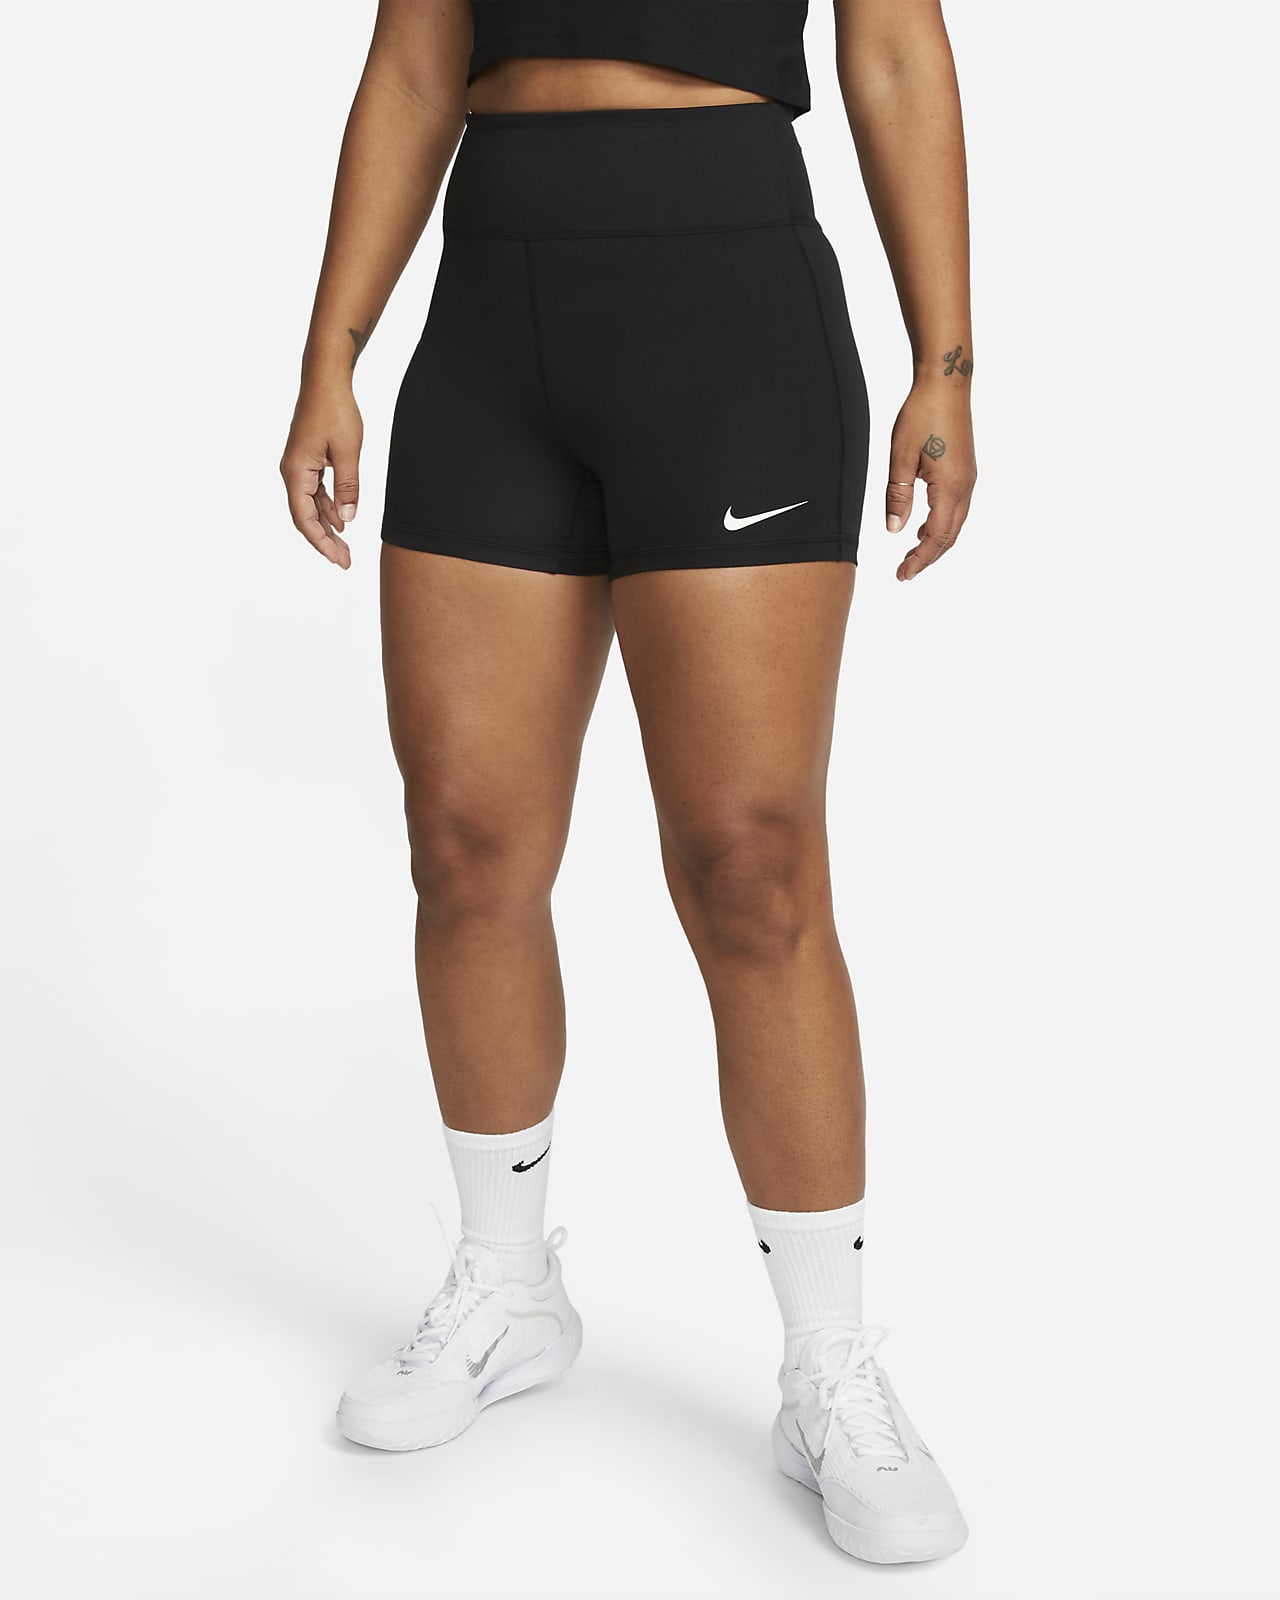 Nike Dri-FIT Advantage Tennisshorts mit hohem Taillenbund für Damen (ca